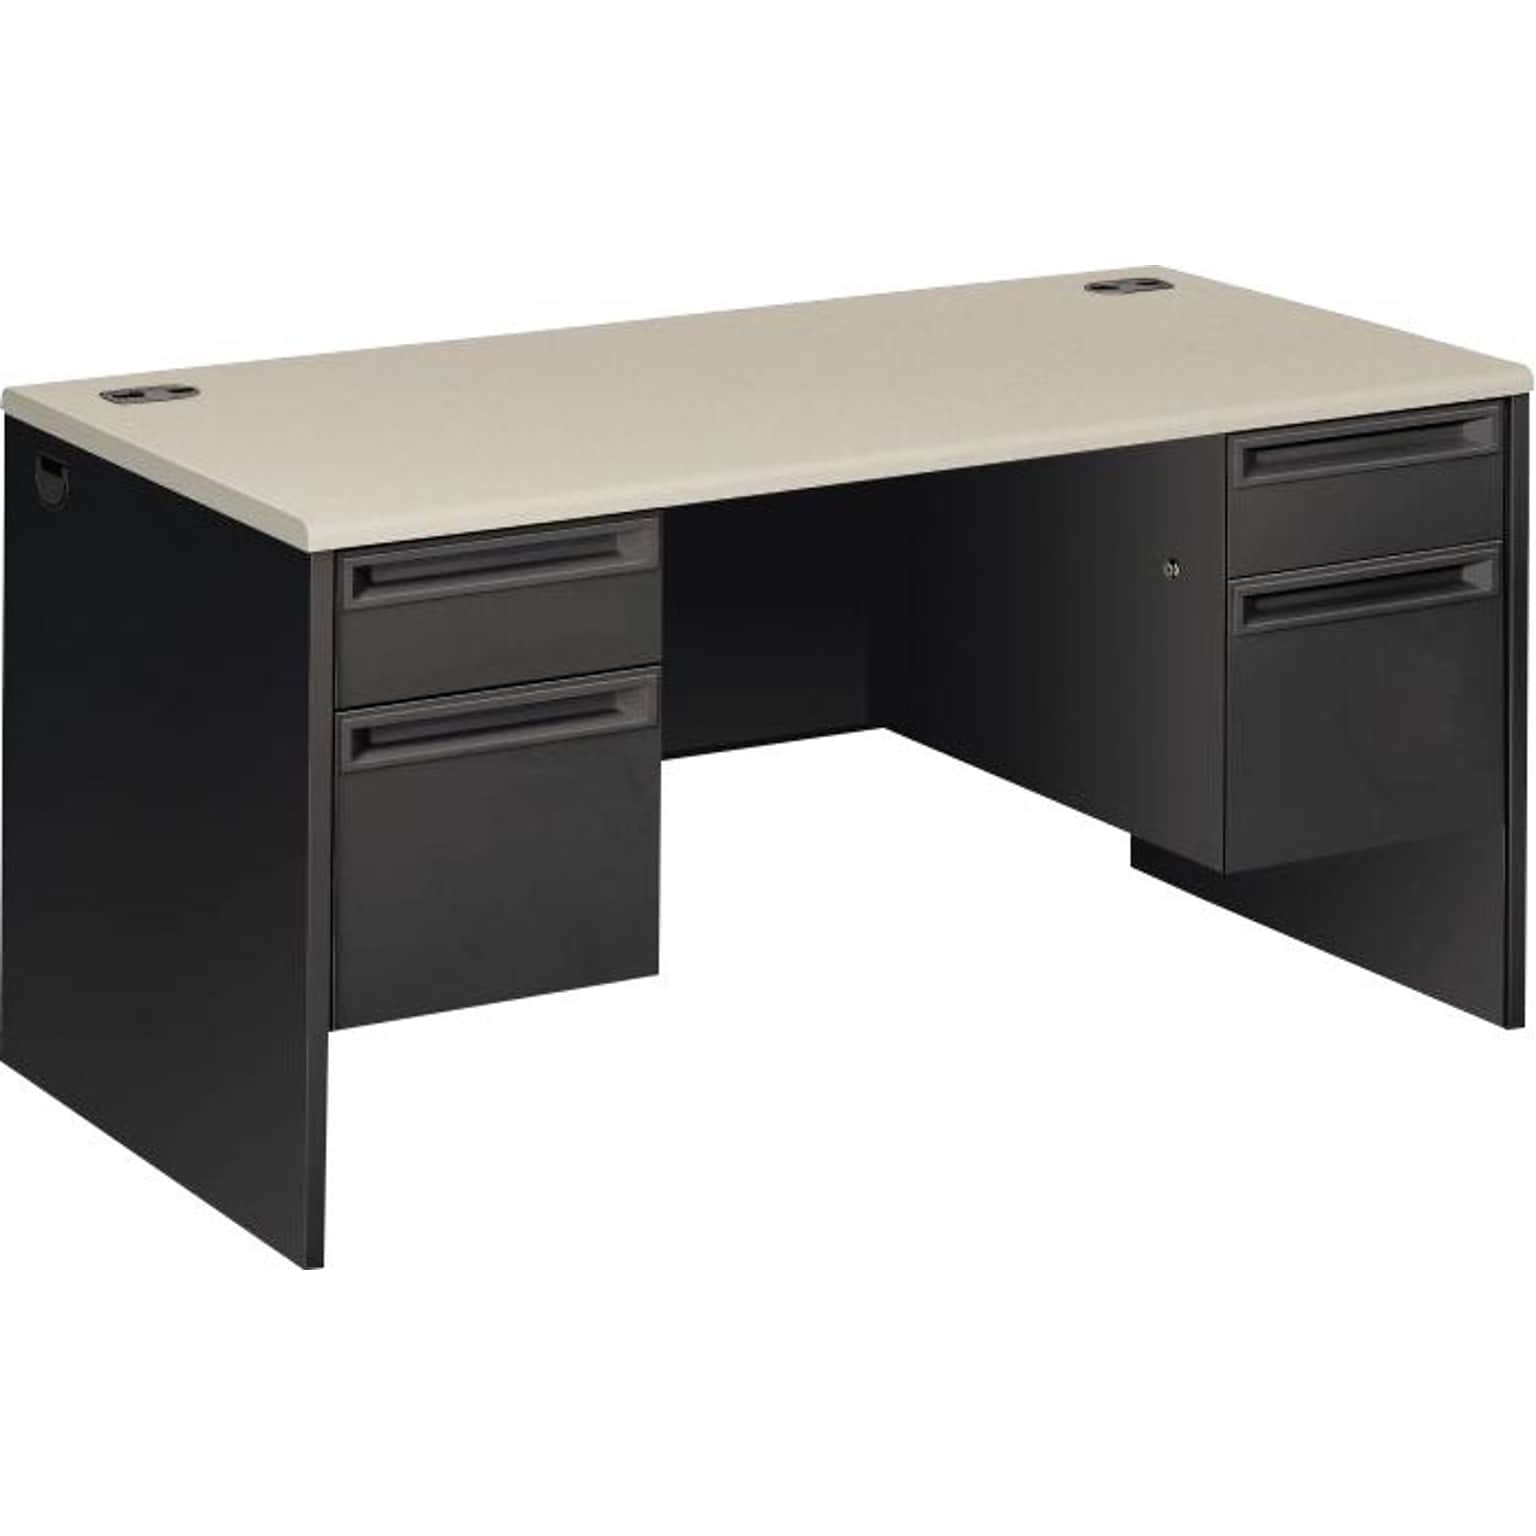 HON 38000 Series Double Pedestal Desk, Gray/Charcoal, 29 1/2H x 60W x 30D